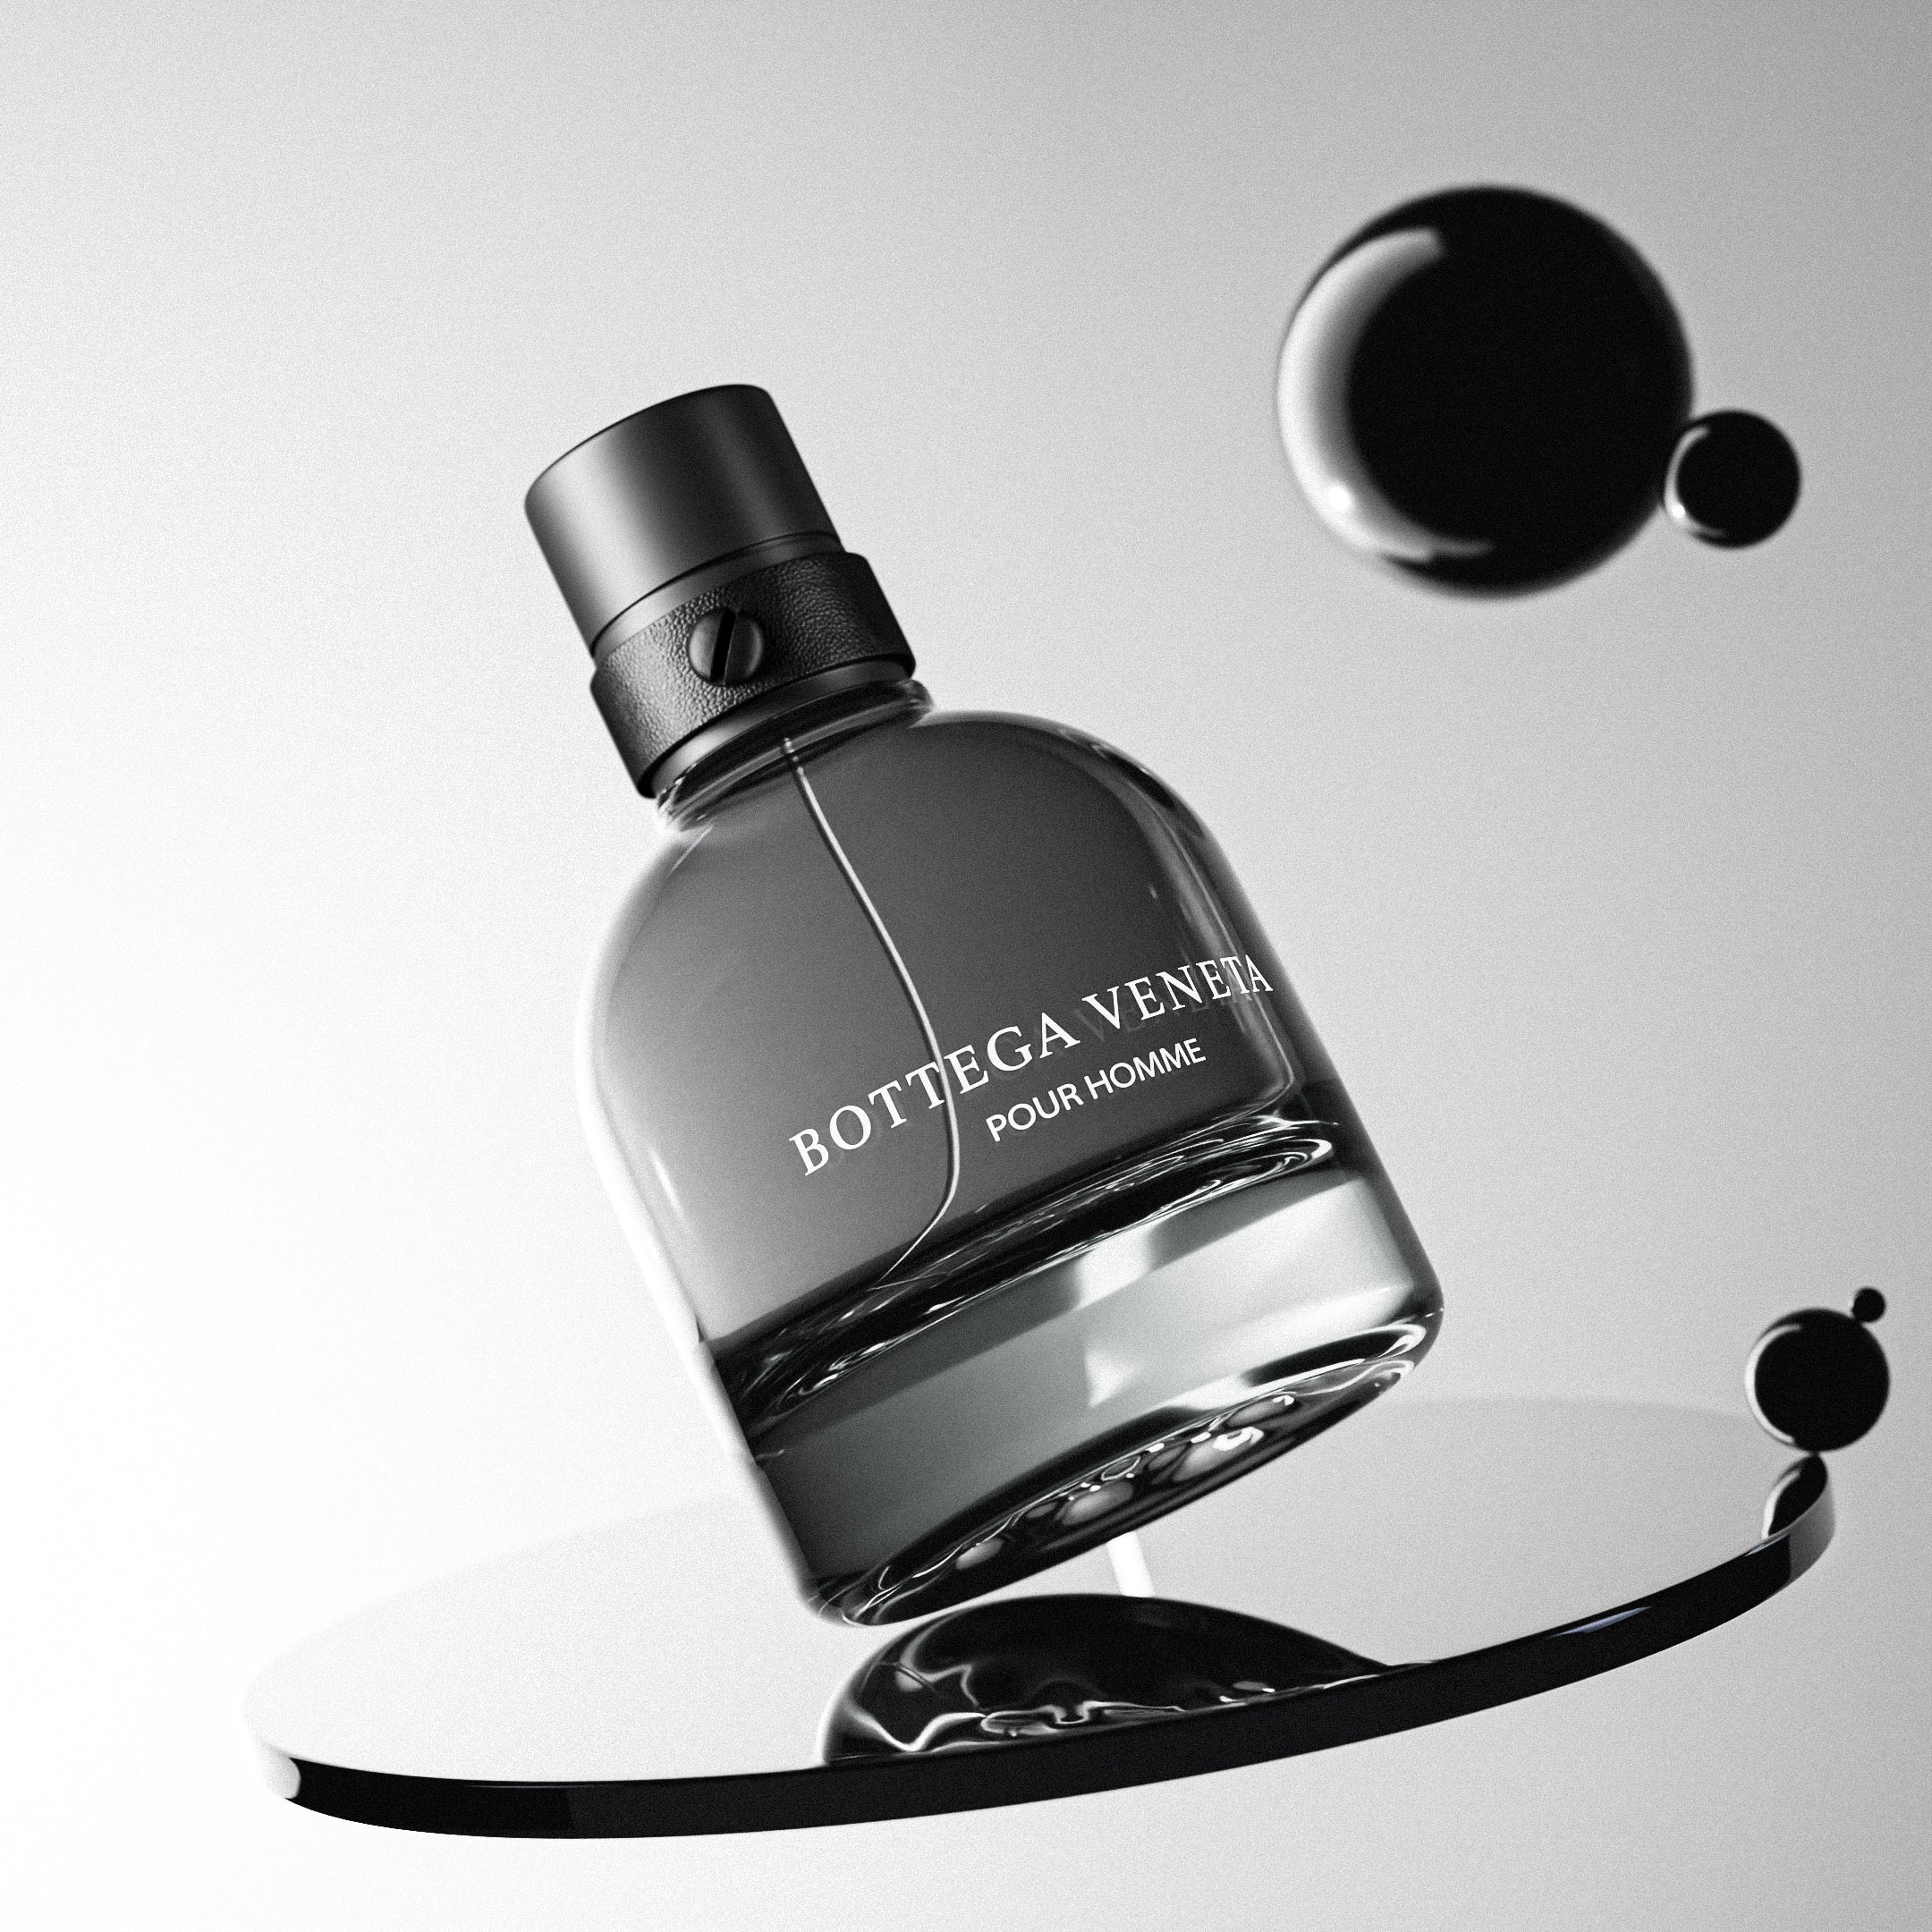 Bottega Veneta Pour Homme EDT For Men | My Perfume Shop Australia